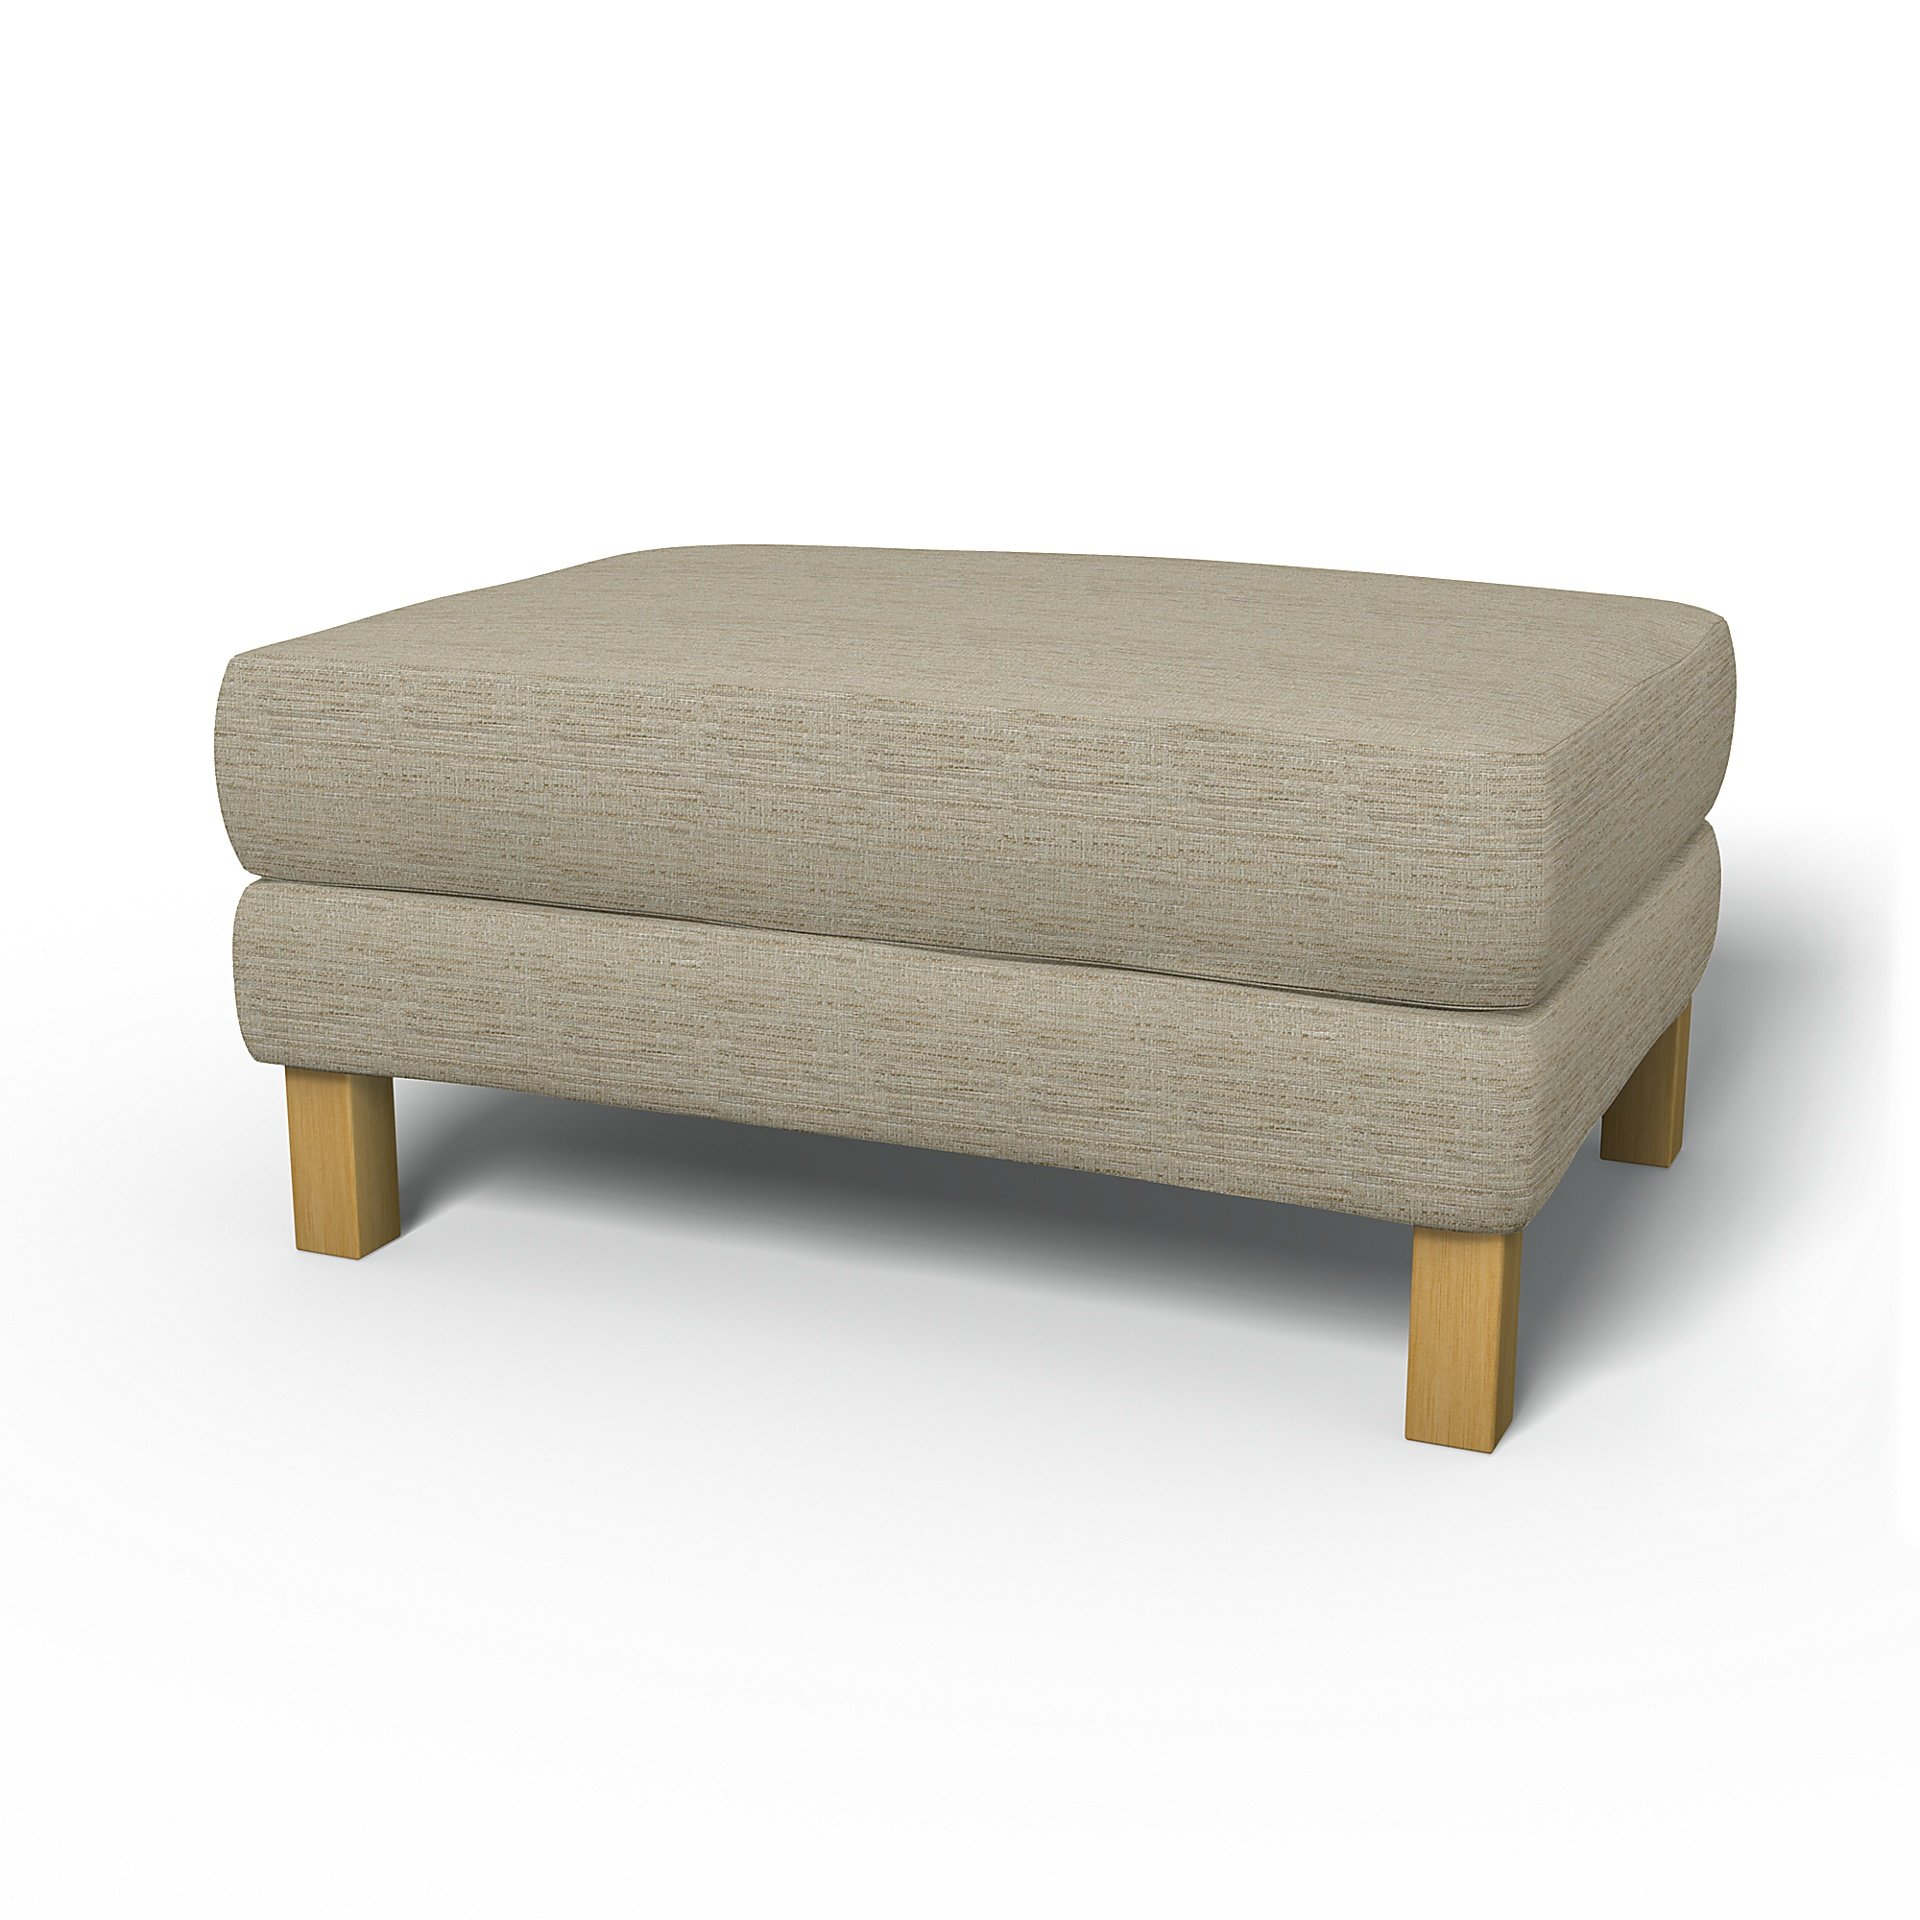 IKEA - Karlstad Footstool Cover, Light Sand, Boucle & Texture - Bemz